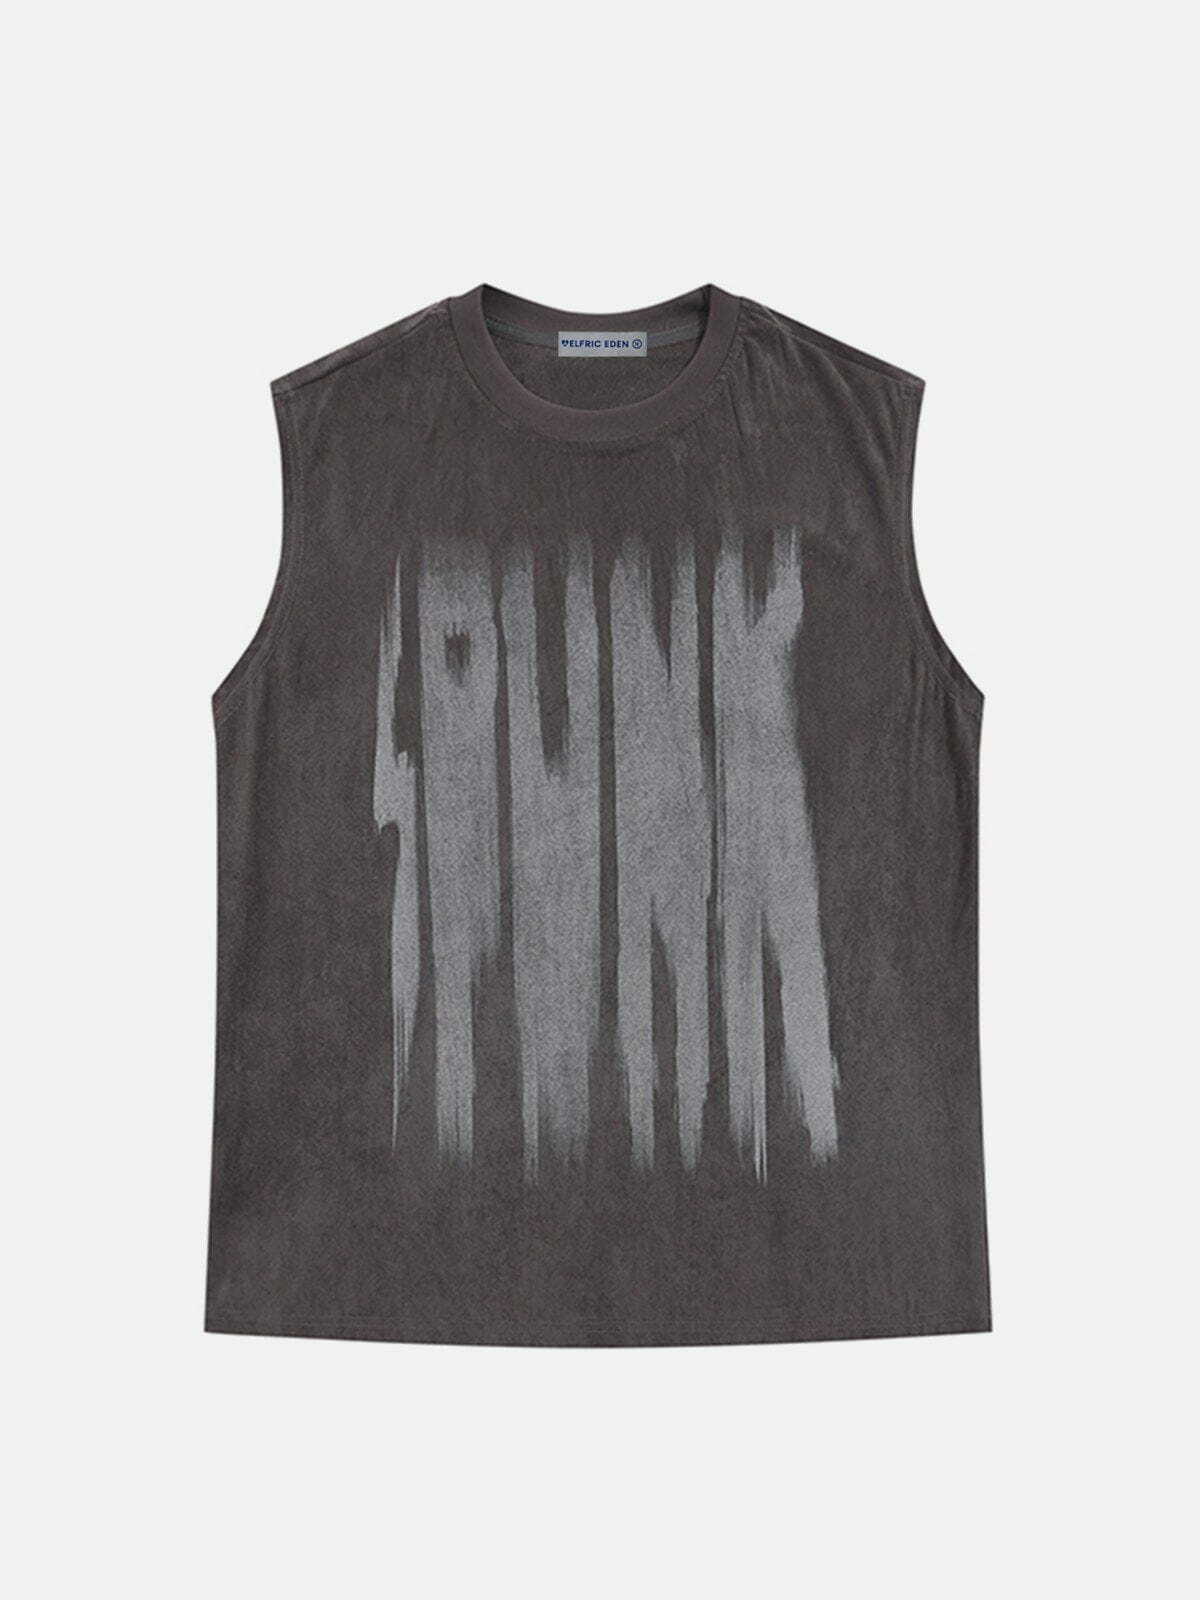 blurring design print vest   edgy streetwear essential 2271